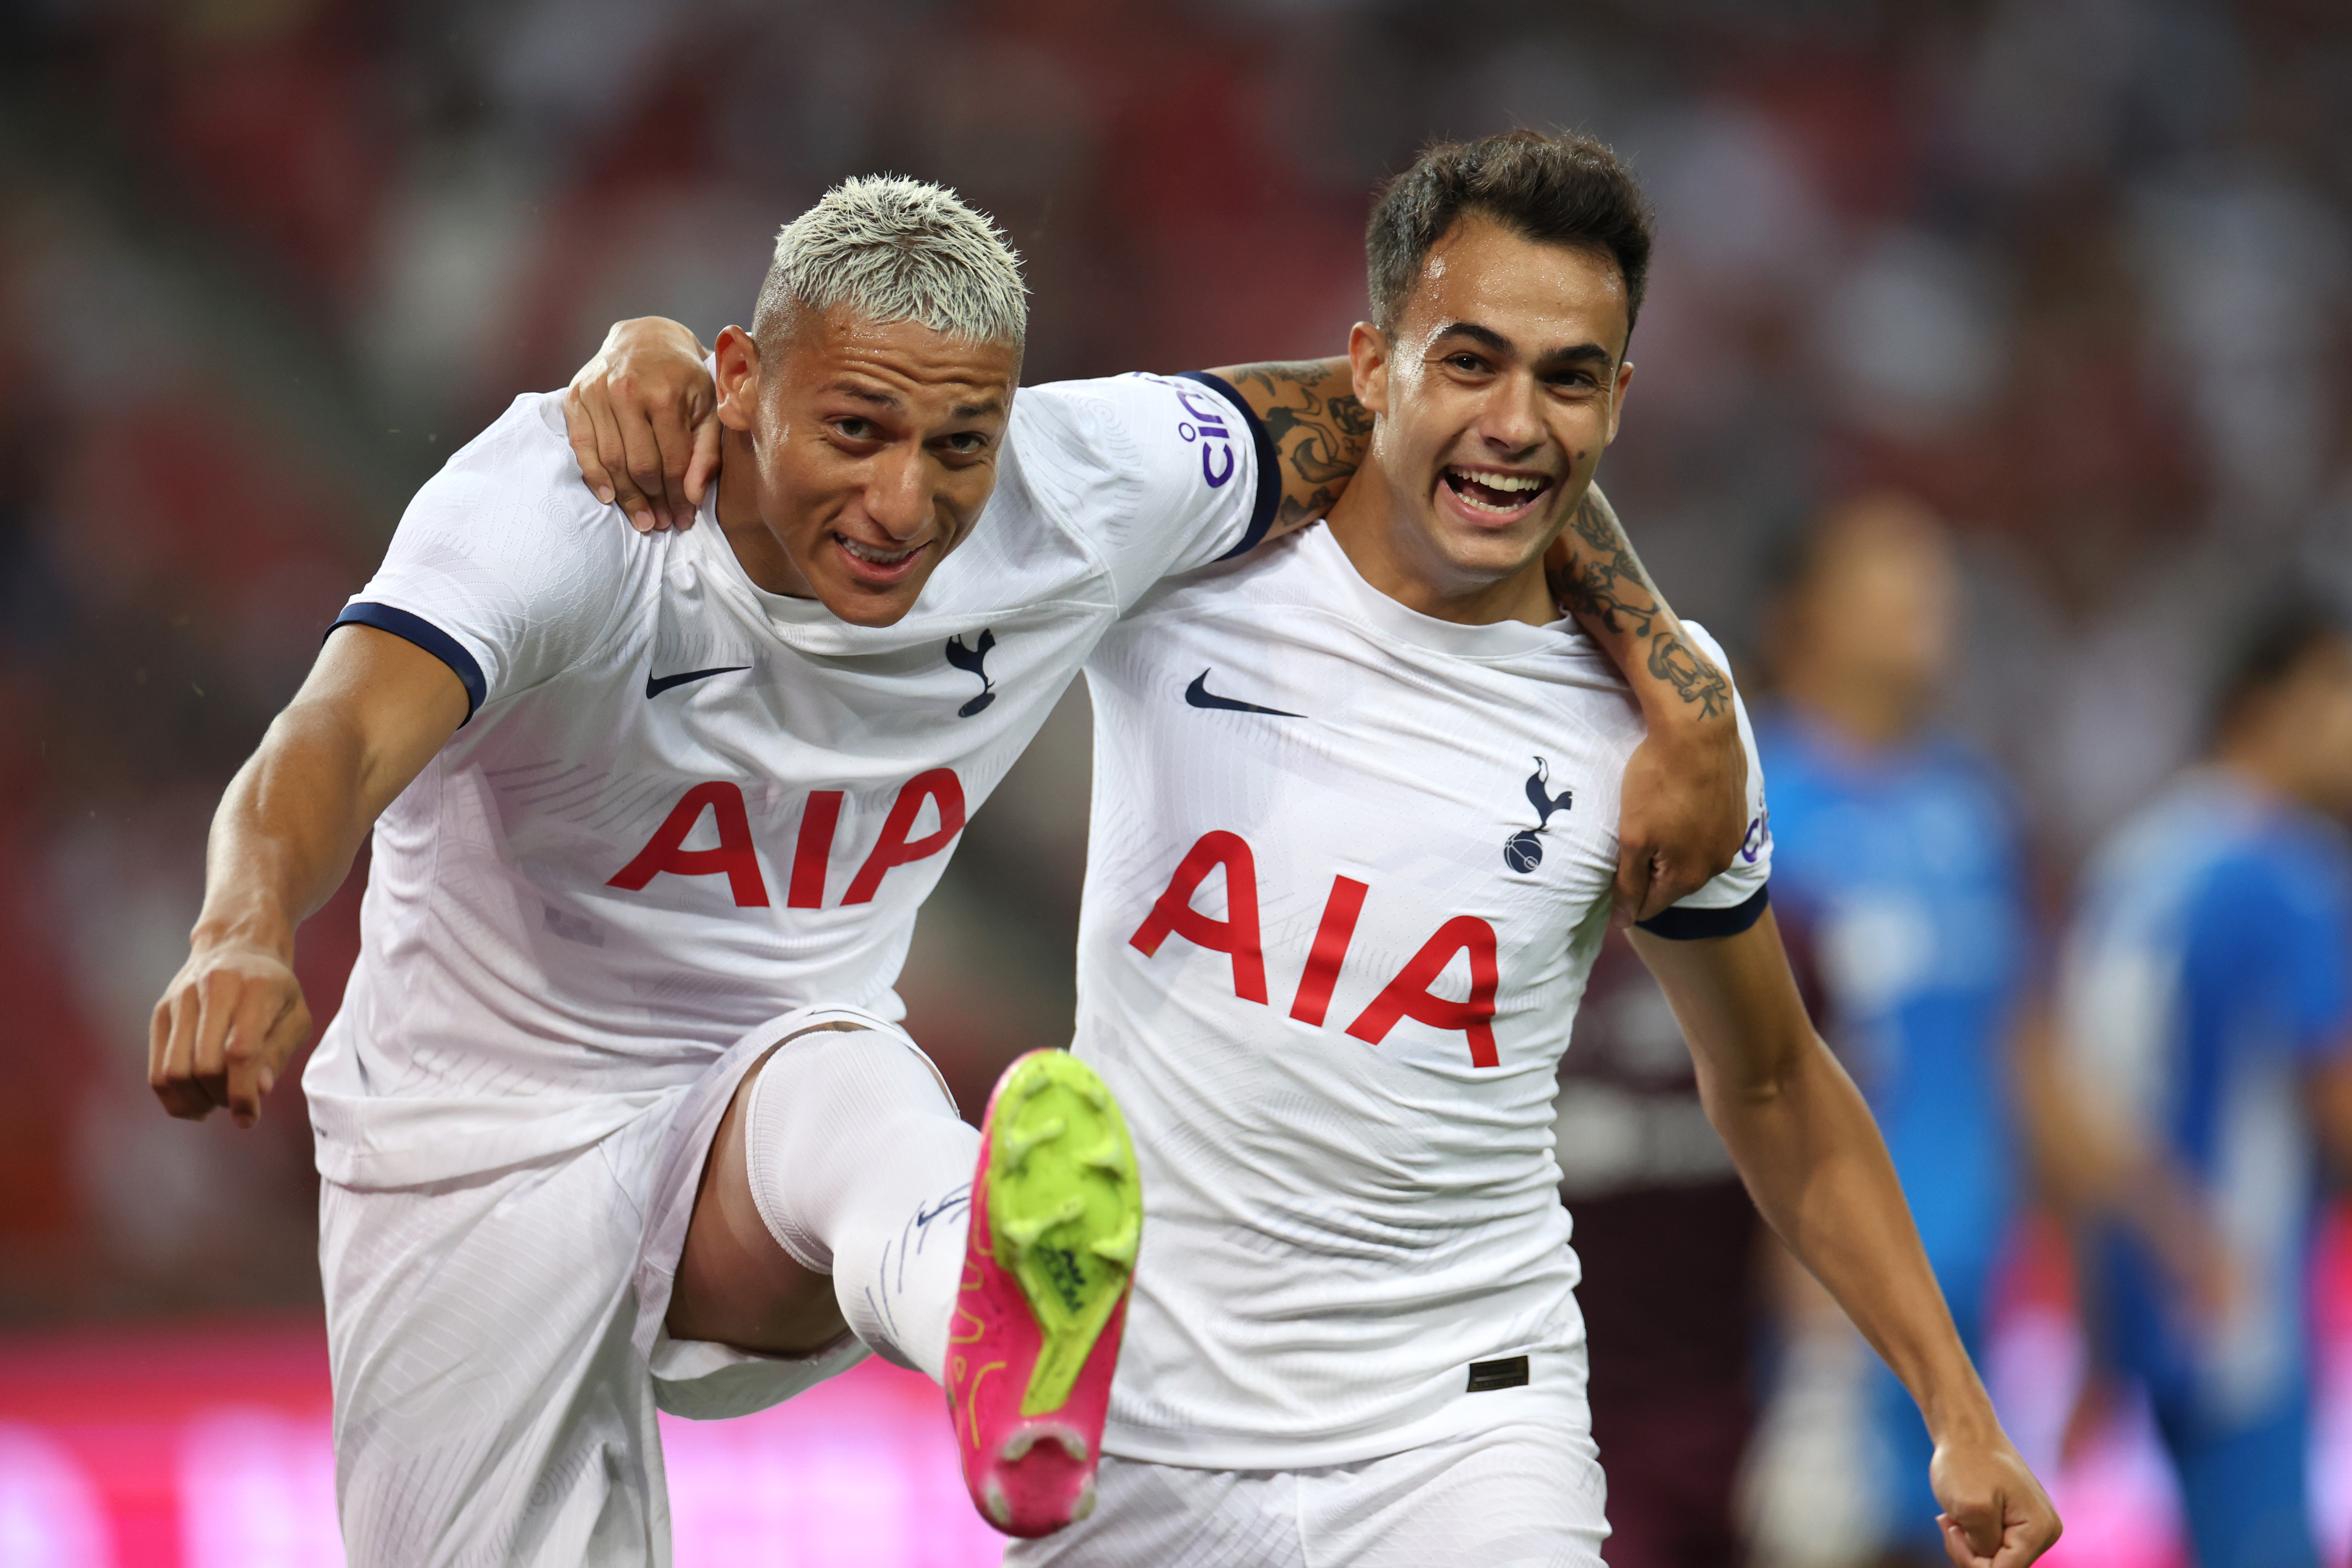 Tottenham Hotspur v Lion City Sailors - Pre-Season Friendly